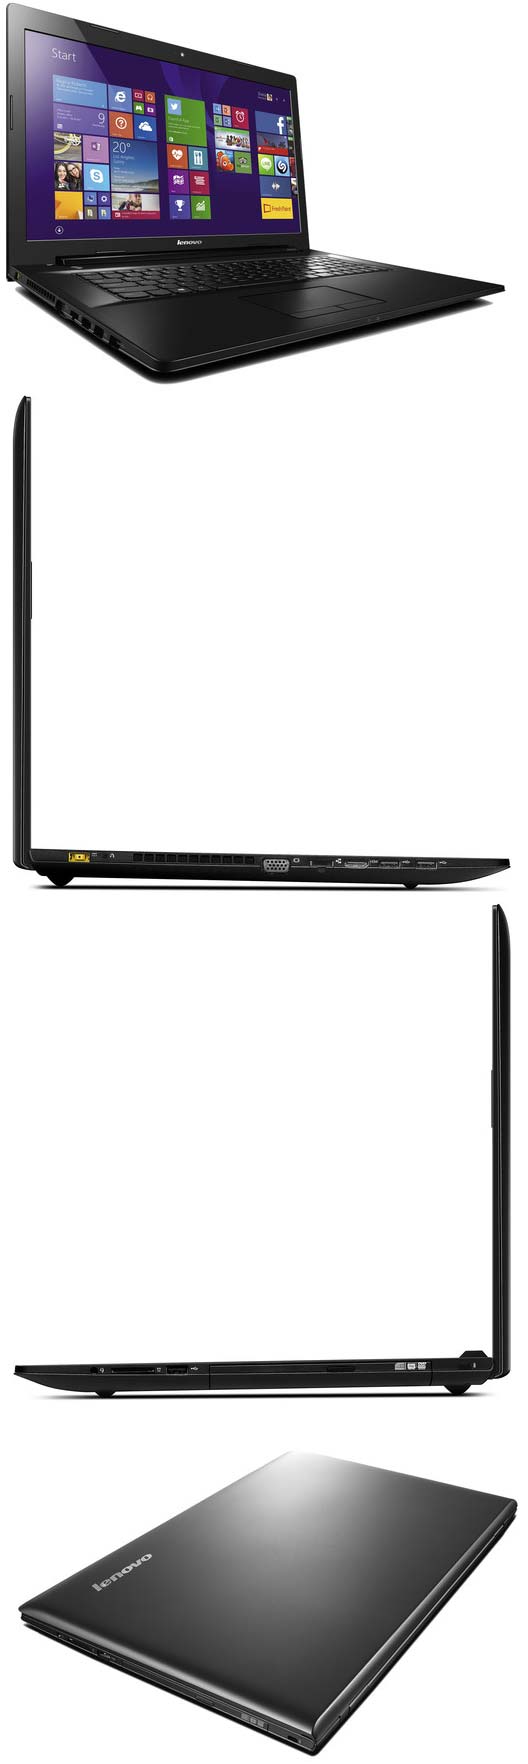 Ноутбук Lenovo G70 80HW000WUS